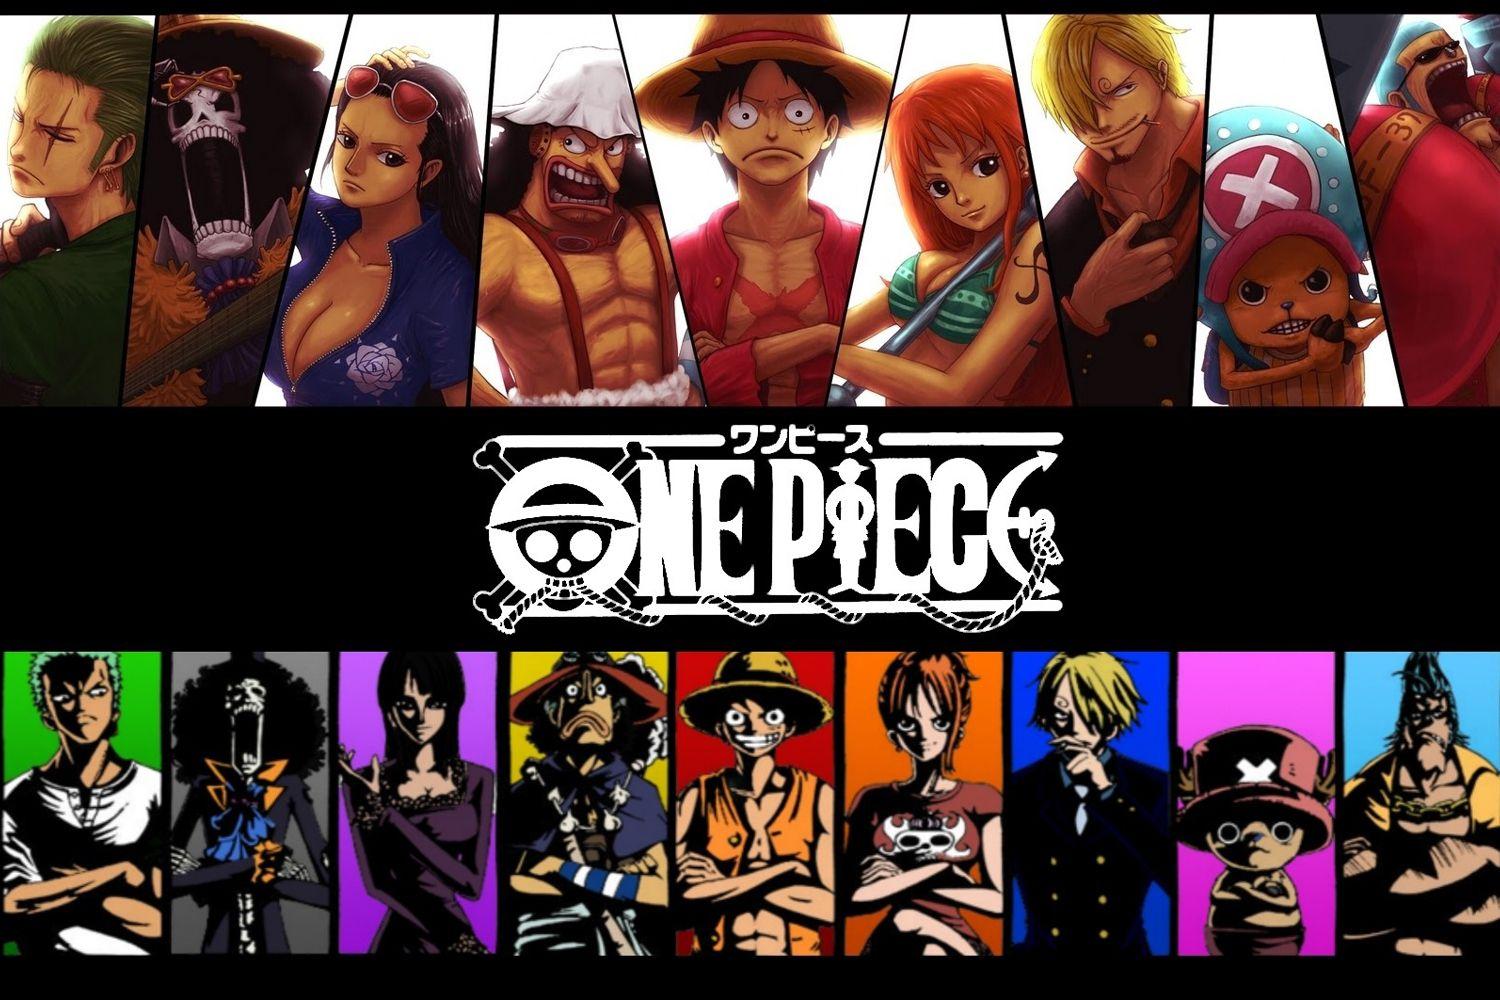 Best One Piece New World Wallpaper HD. One piece new world, One piece crew, One piece all characters